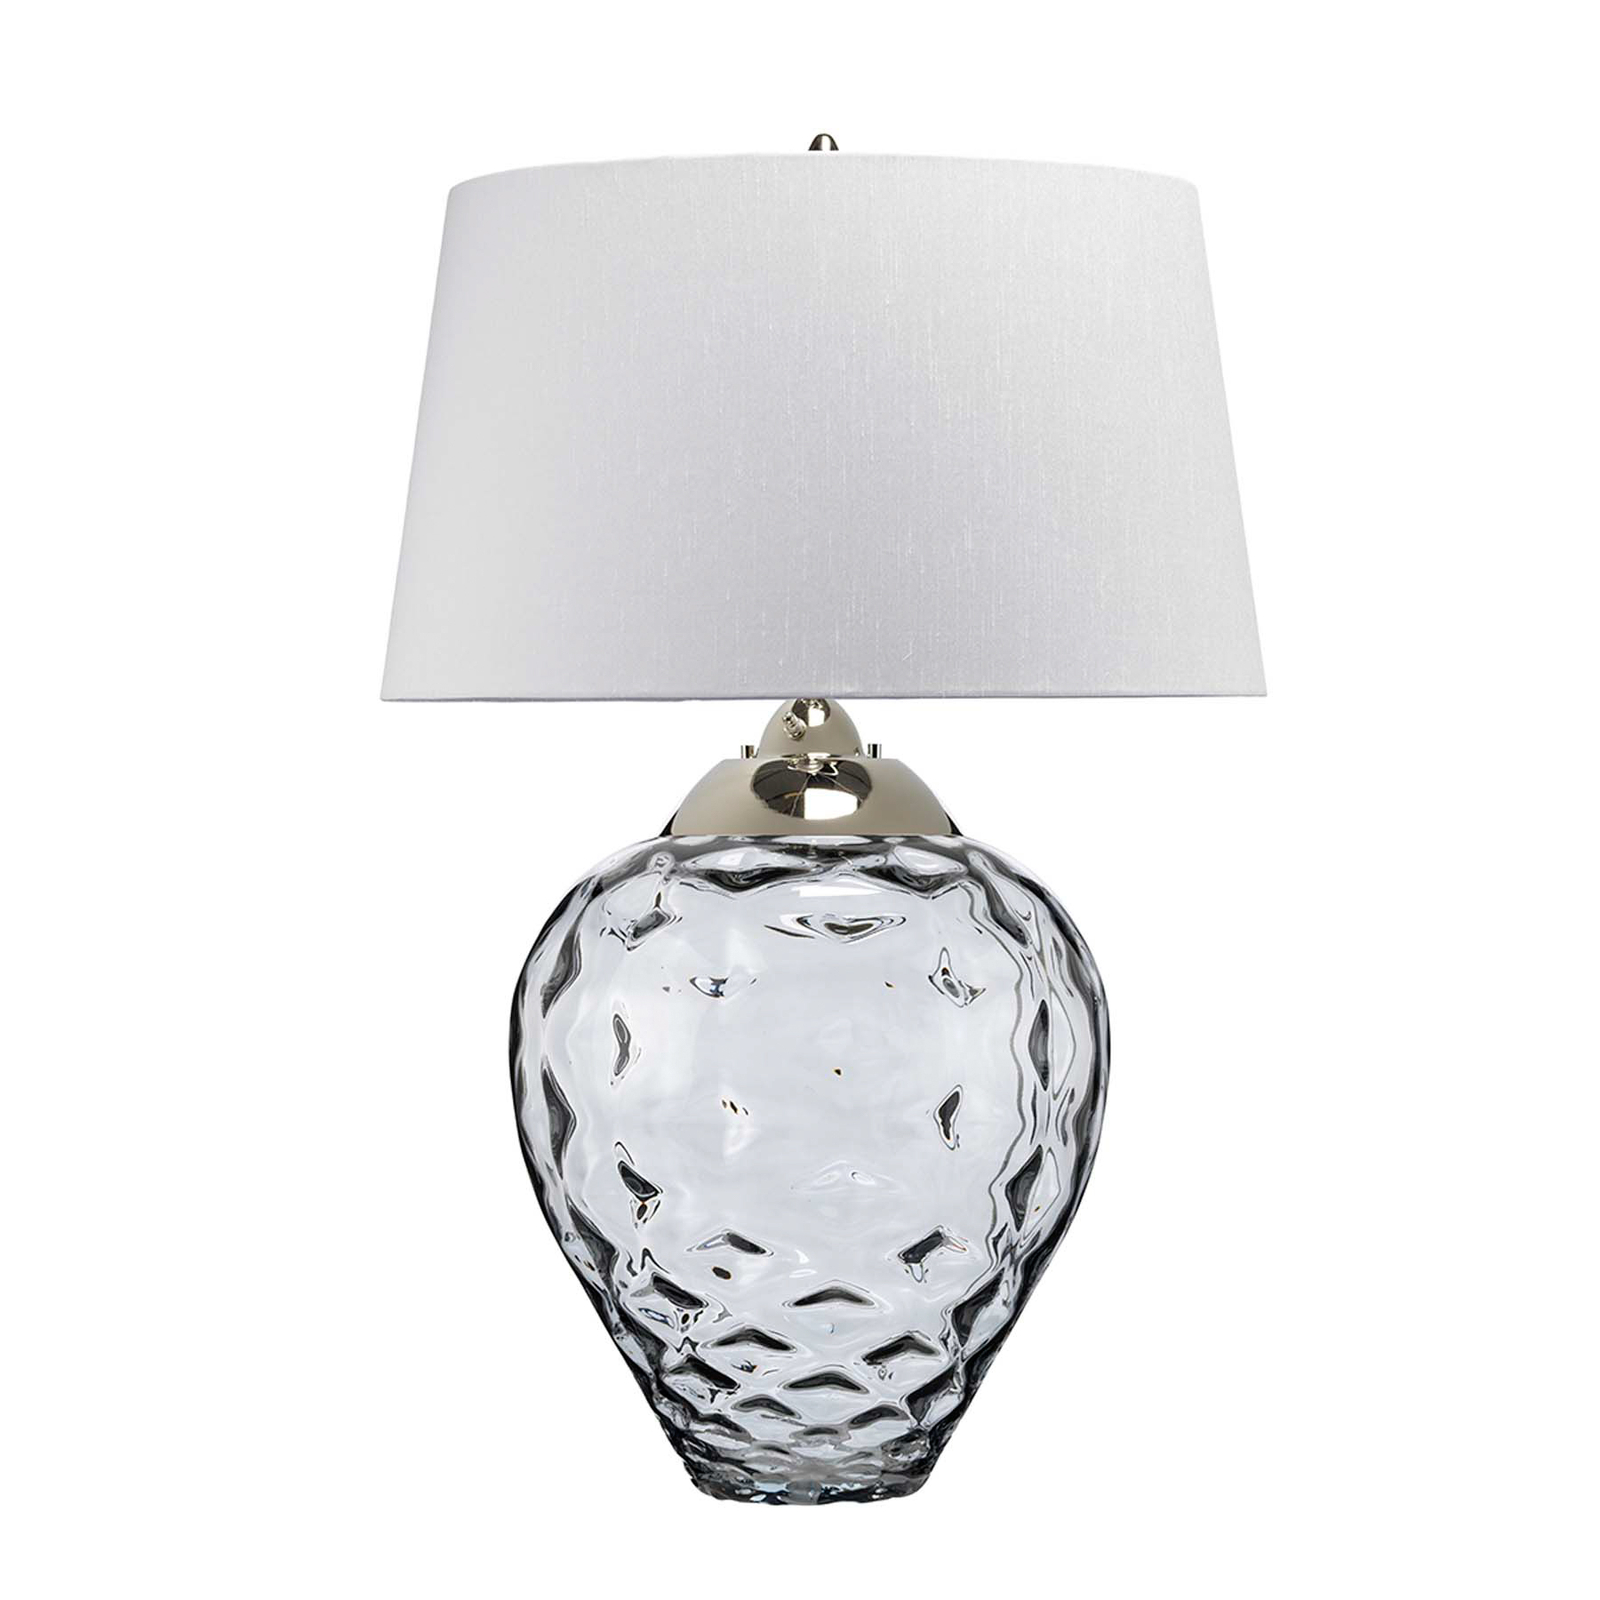 Samara bordlampe, Ø 51 cm, grå, stoff, glass, 2 lamper